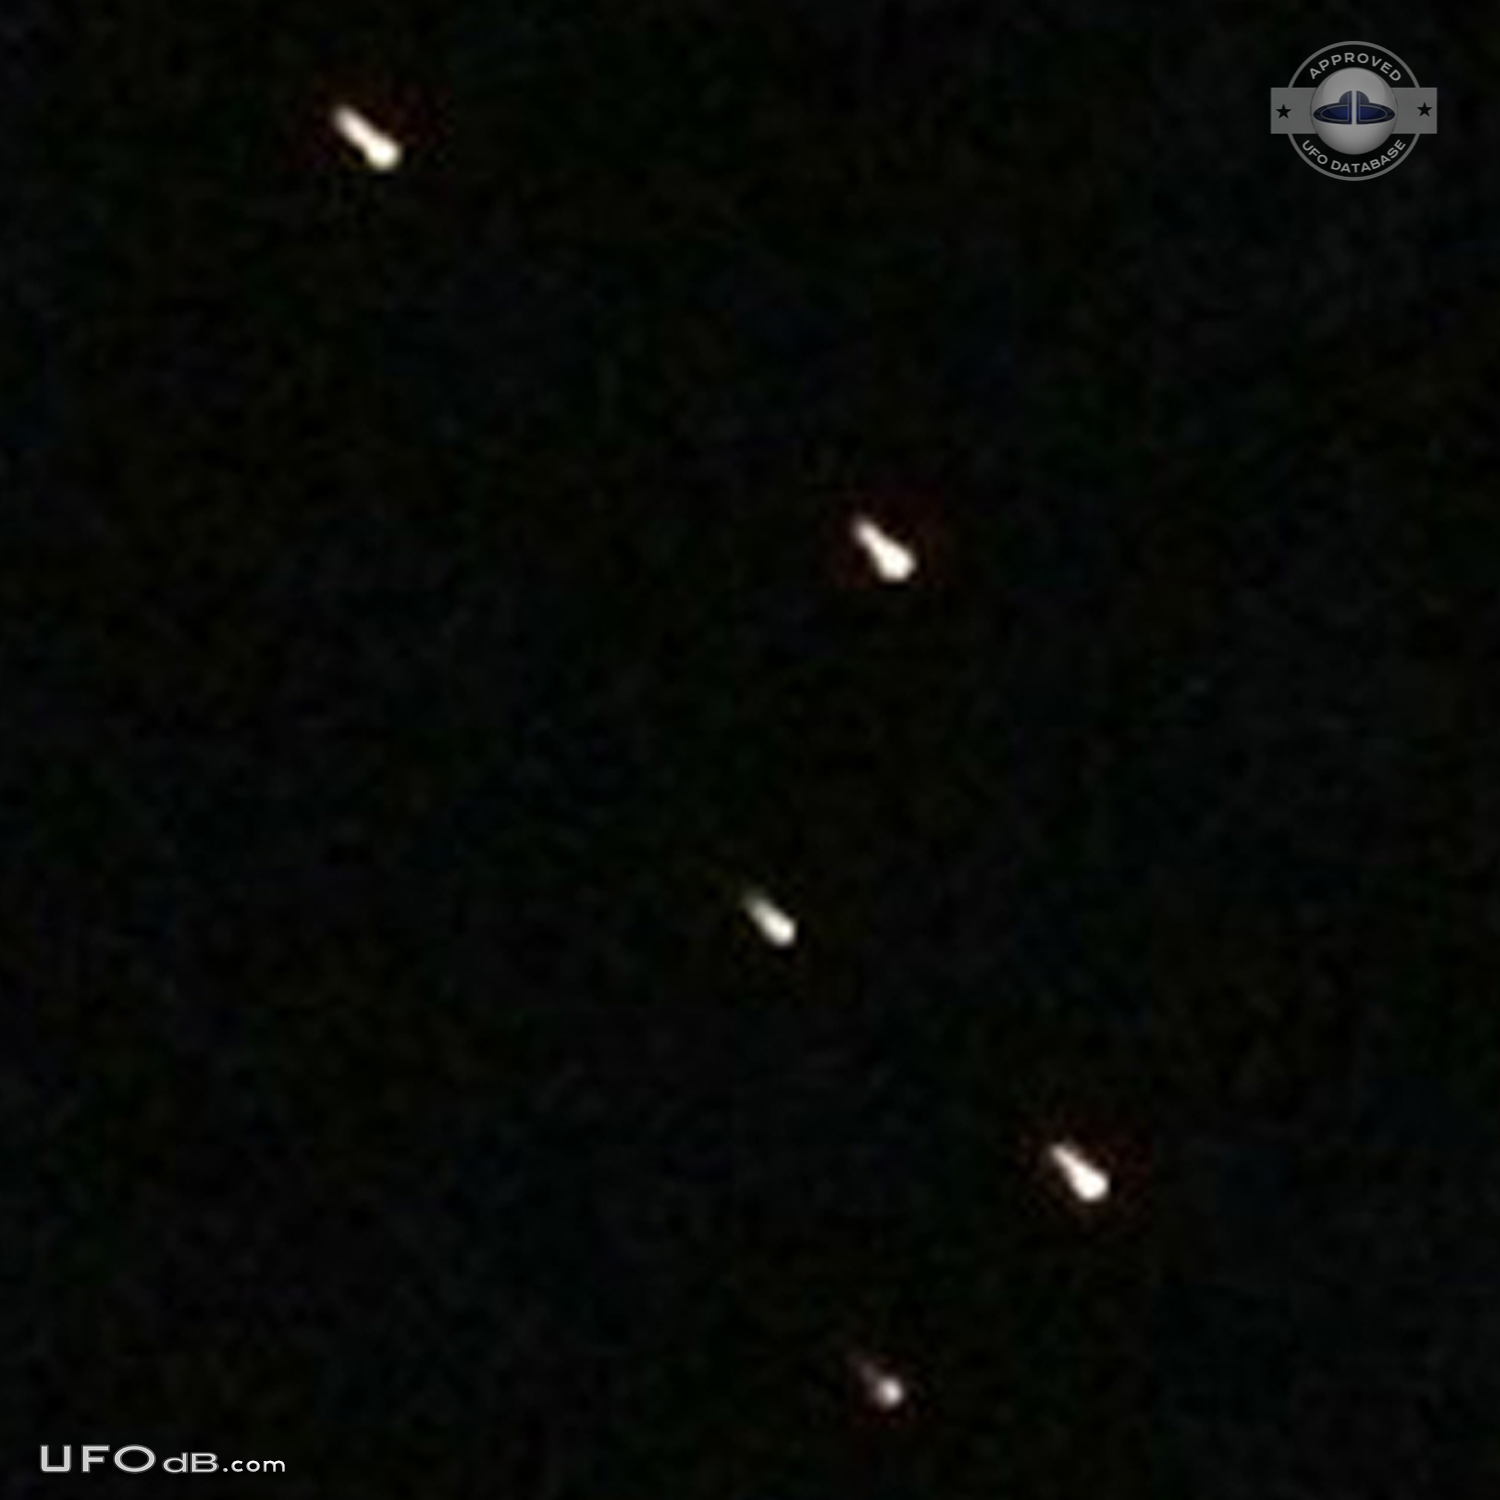 Fleet of orange orbs UFOs seen in the night sky of Oregon, USA in 2012 UFO Picture #539-3